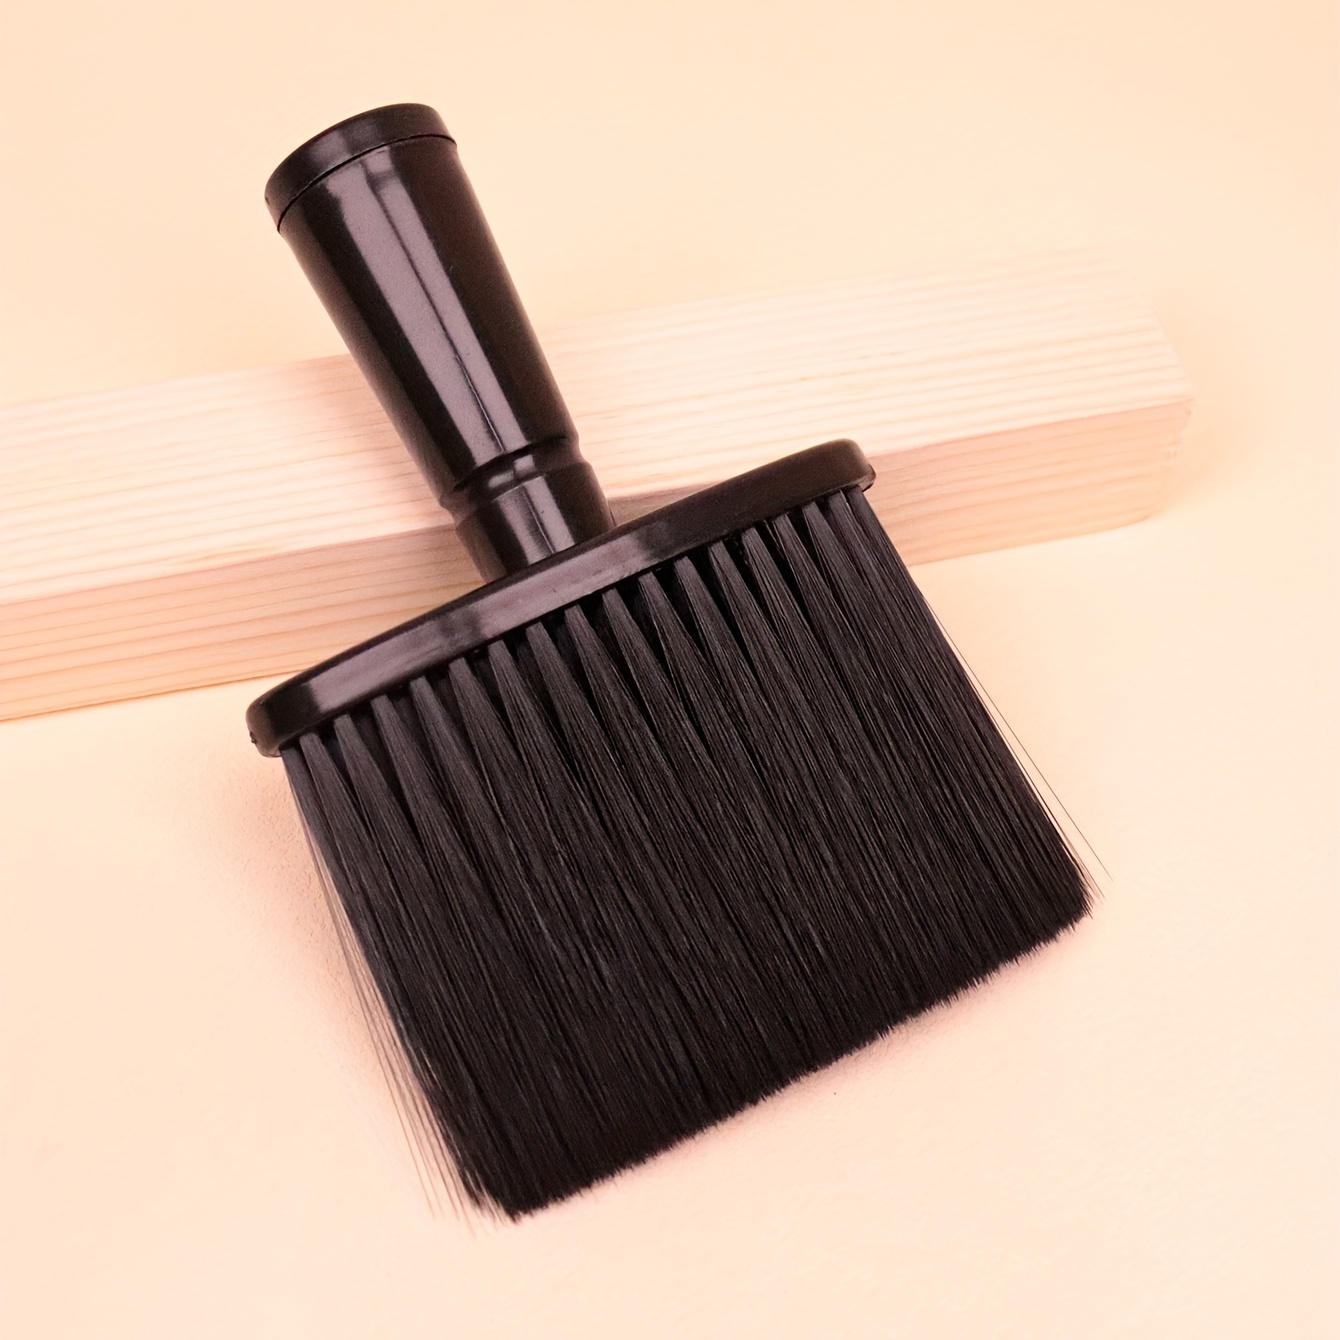 New Professional Barber Shaving Beard Brush Removal Neck Dusting Horse Hair  Brushes Face Mustache Salon Cleaning